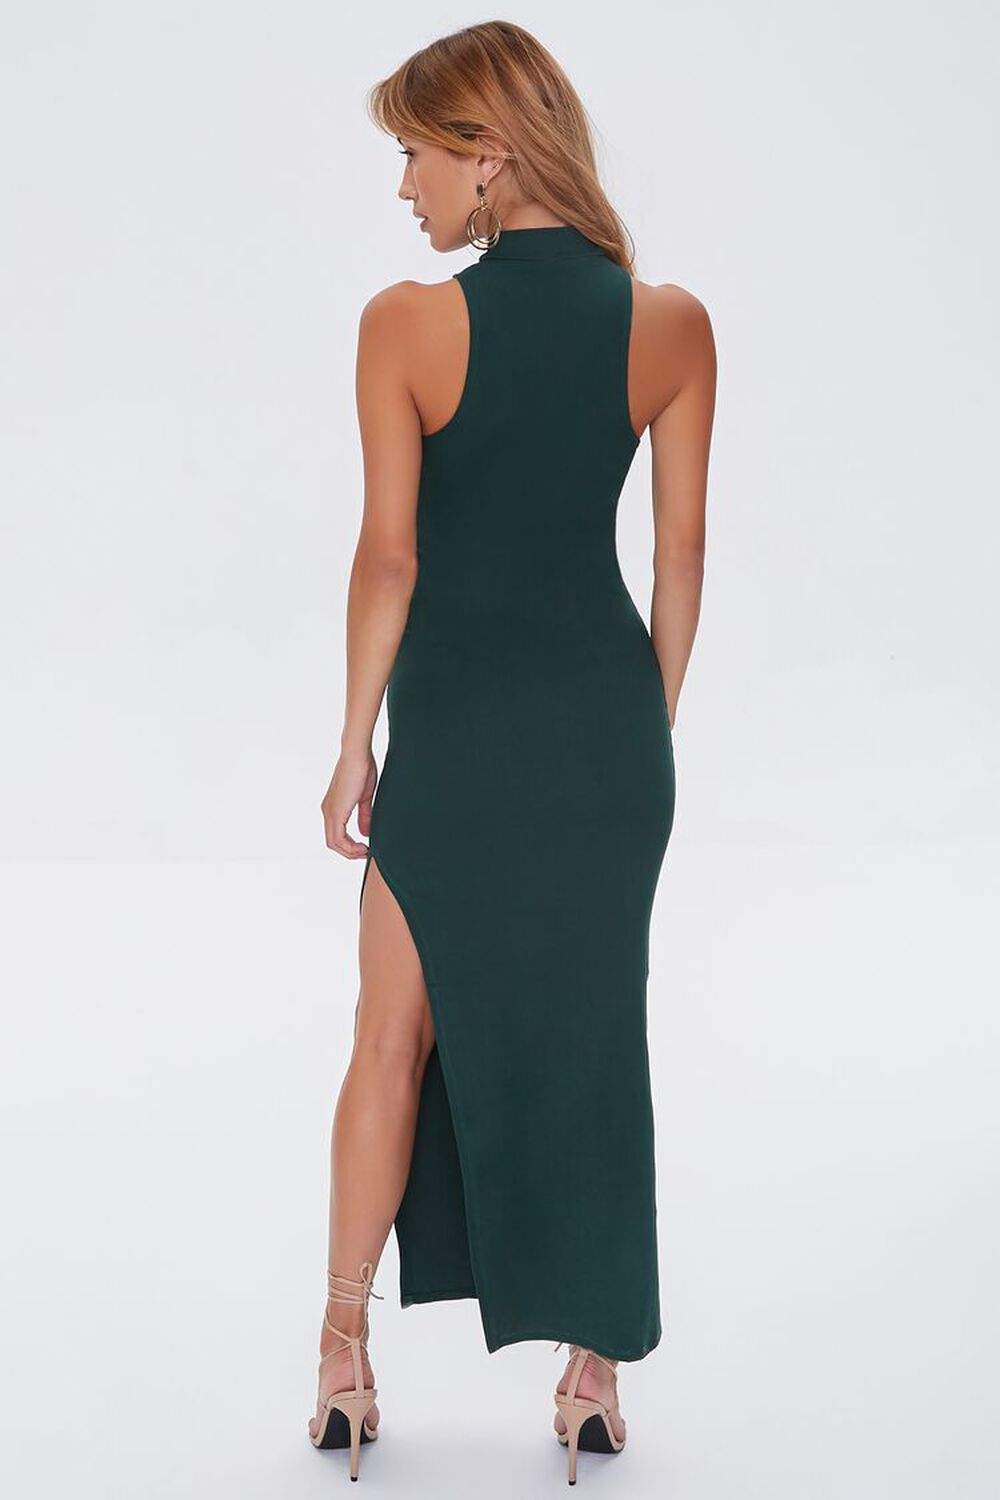 HUNTER GREEN Sleeveless Side-Slit Maxi Dress, image 3